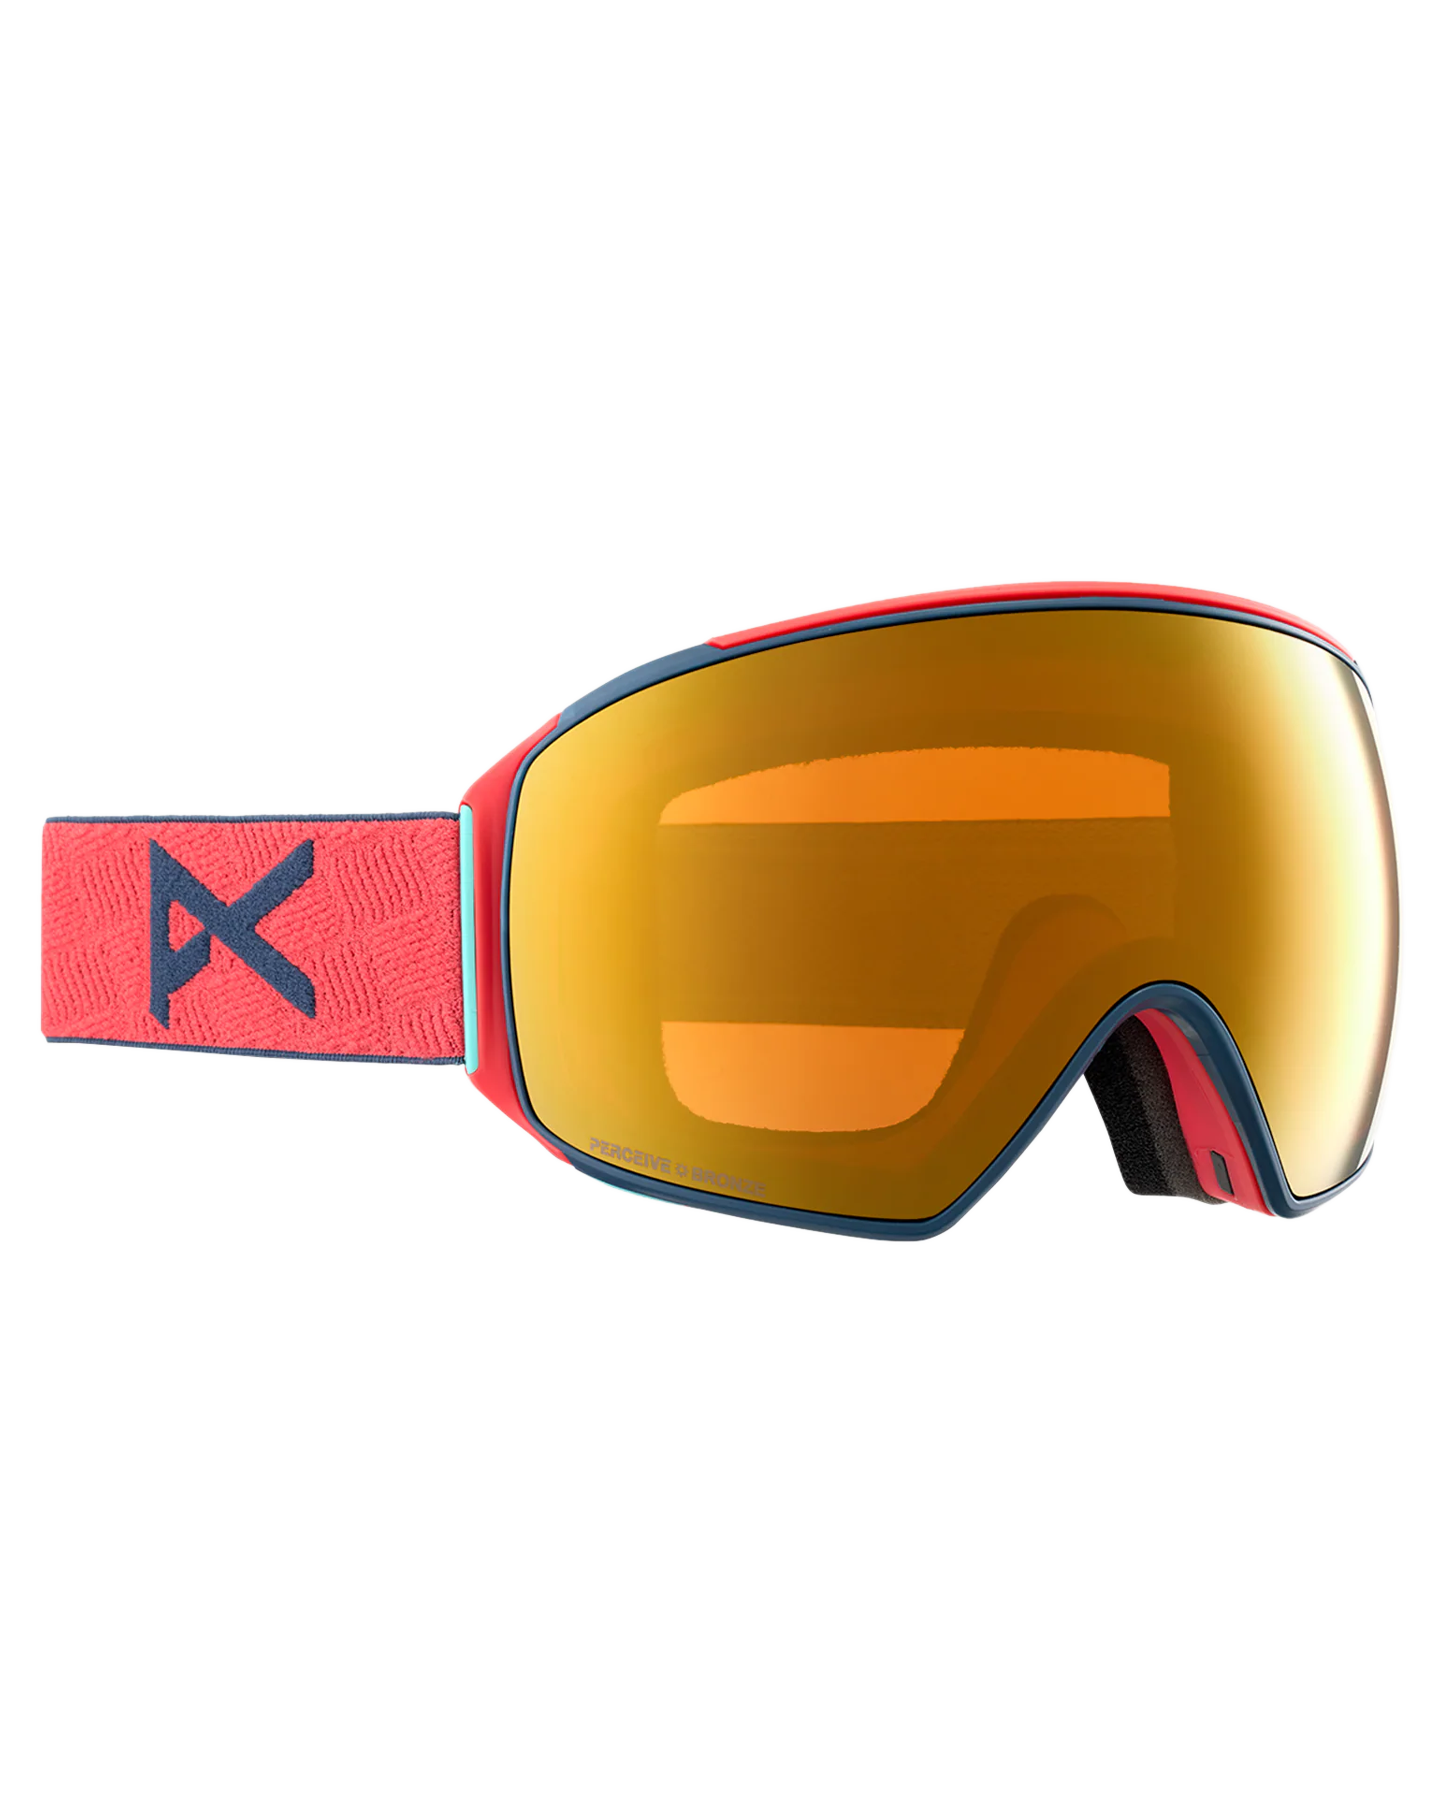 Anon M4 Toric Snow Goggles + Bonus Lens + Mfi® Face Mask - Coral/Perceive Sunny Bronze Lens Men's Snow Goggles - Trojan Wake Ski Snow